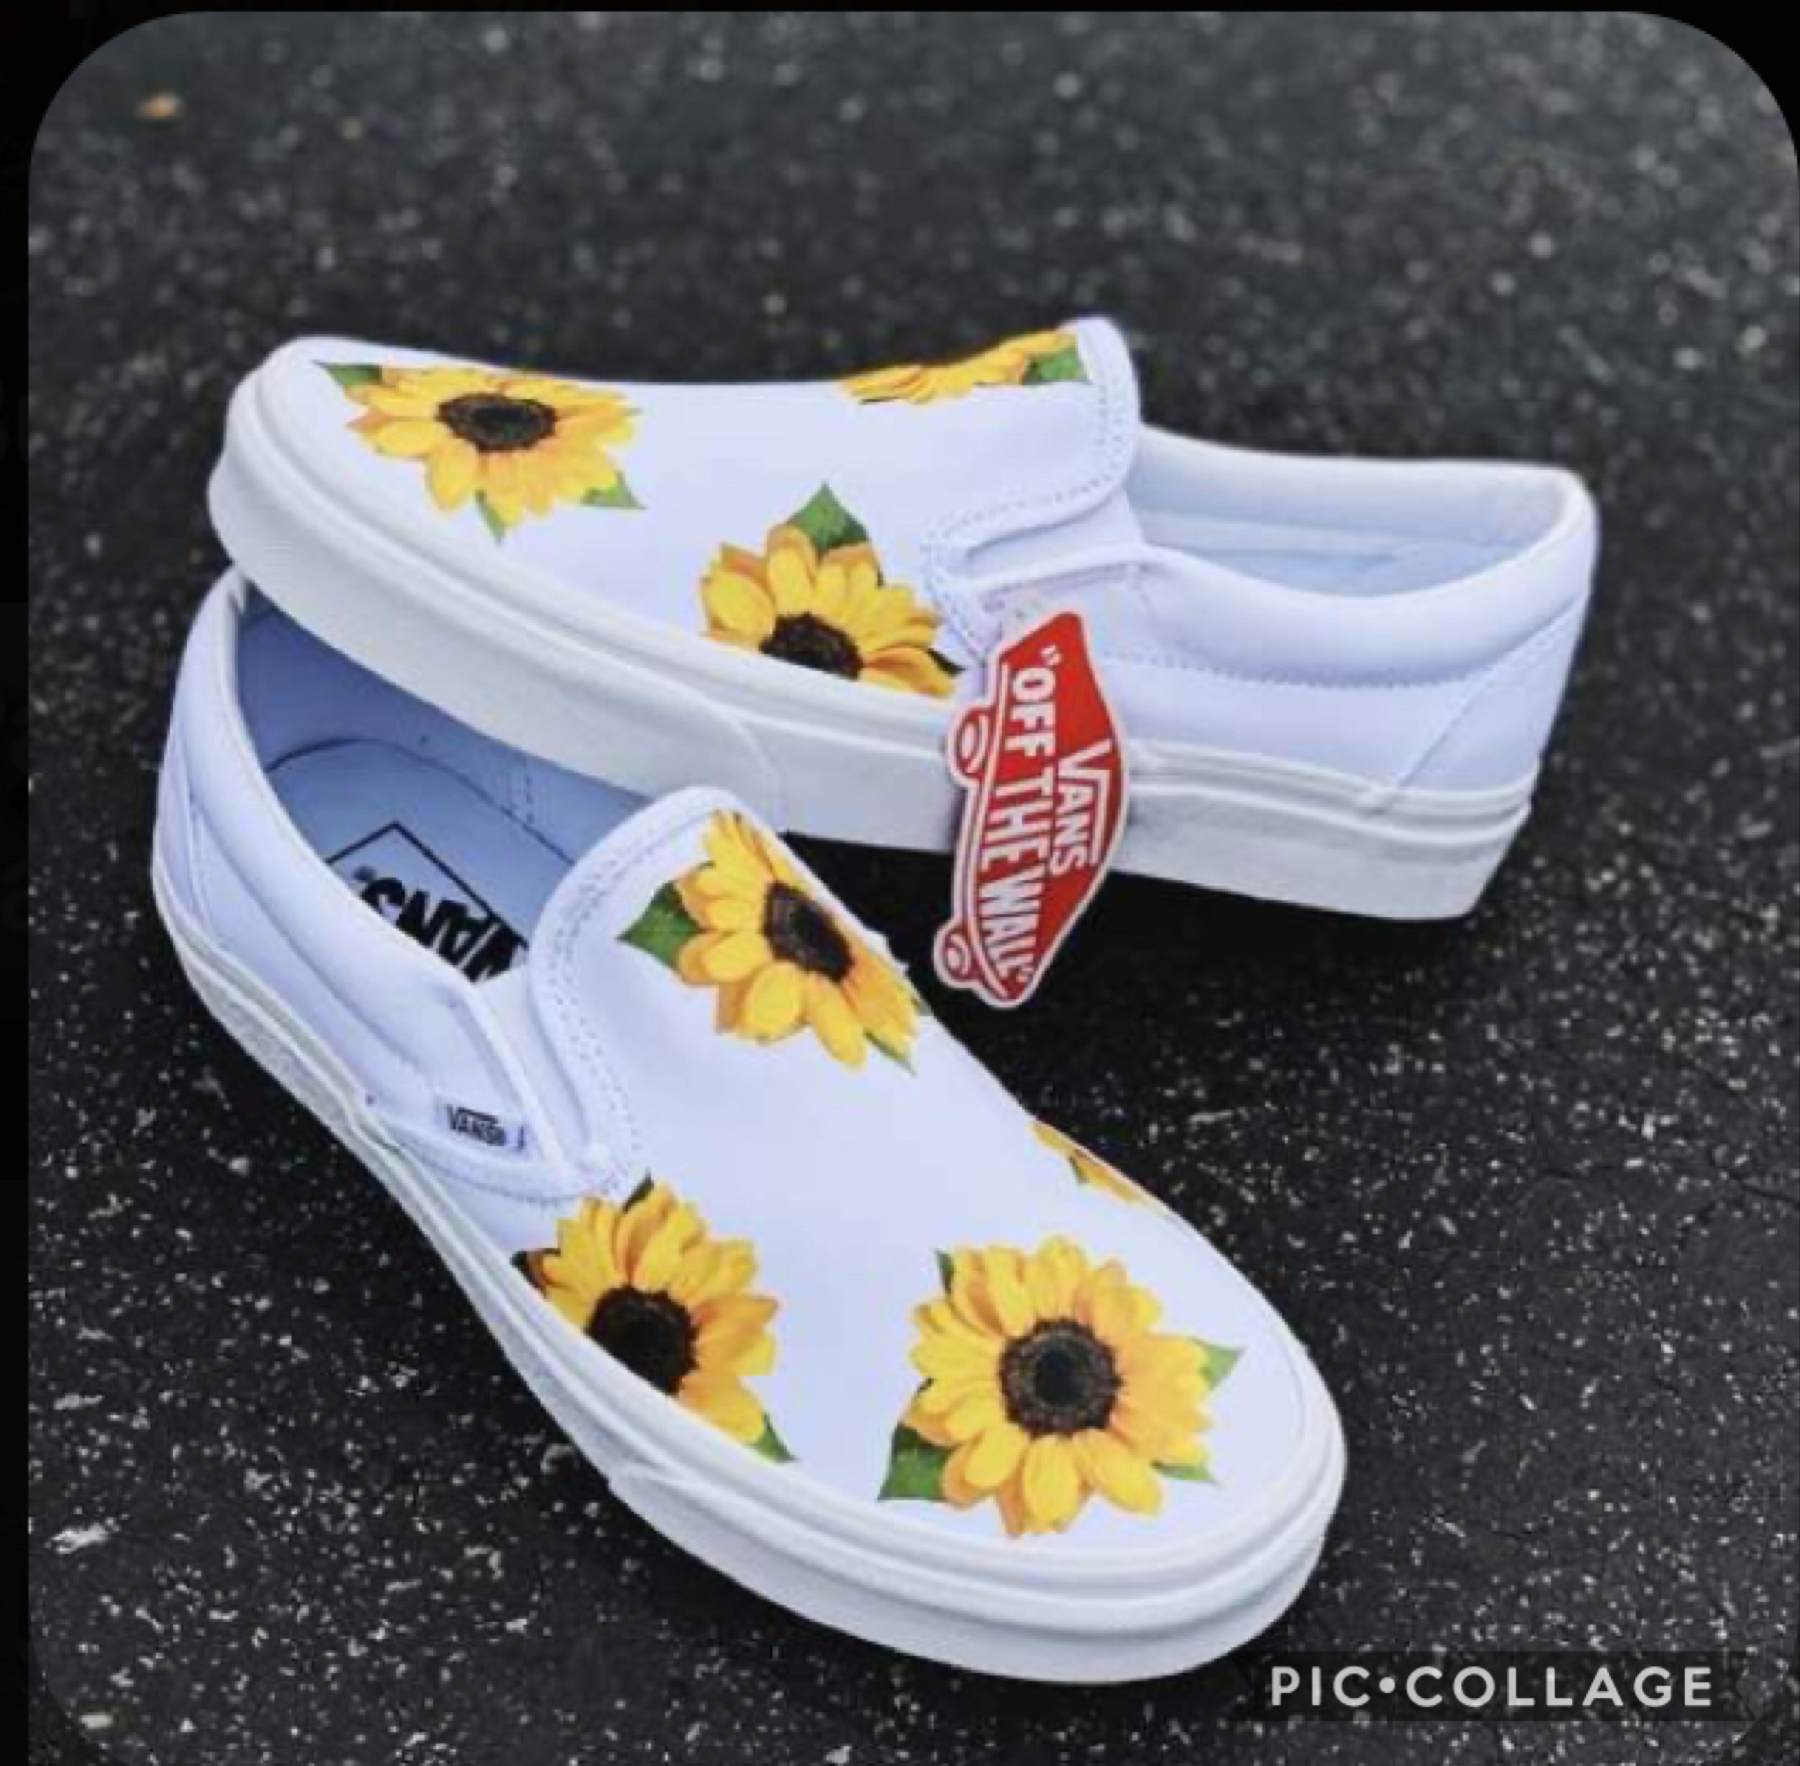 Sunflower Vans
2-23-20